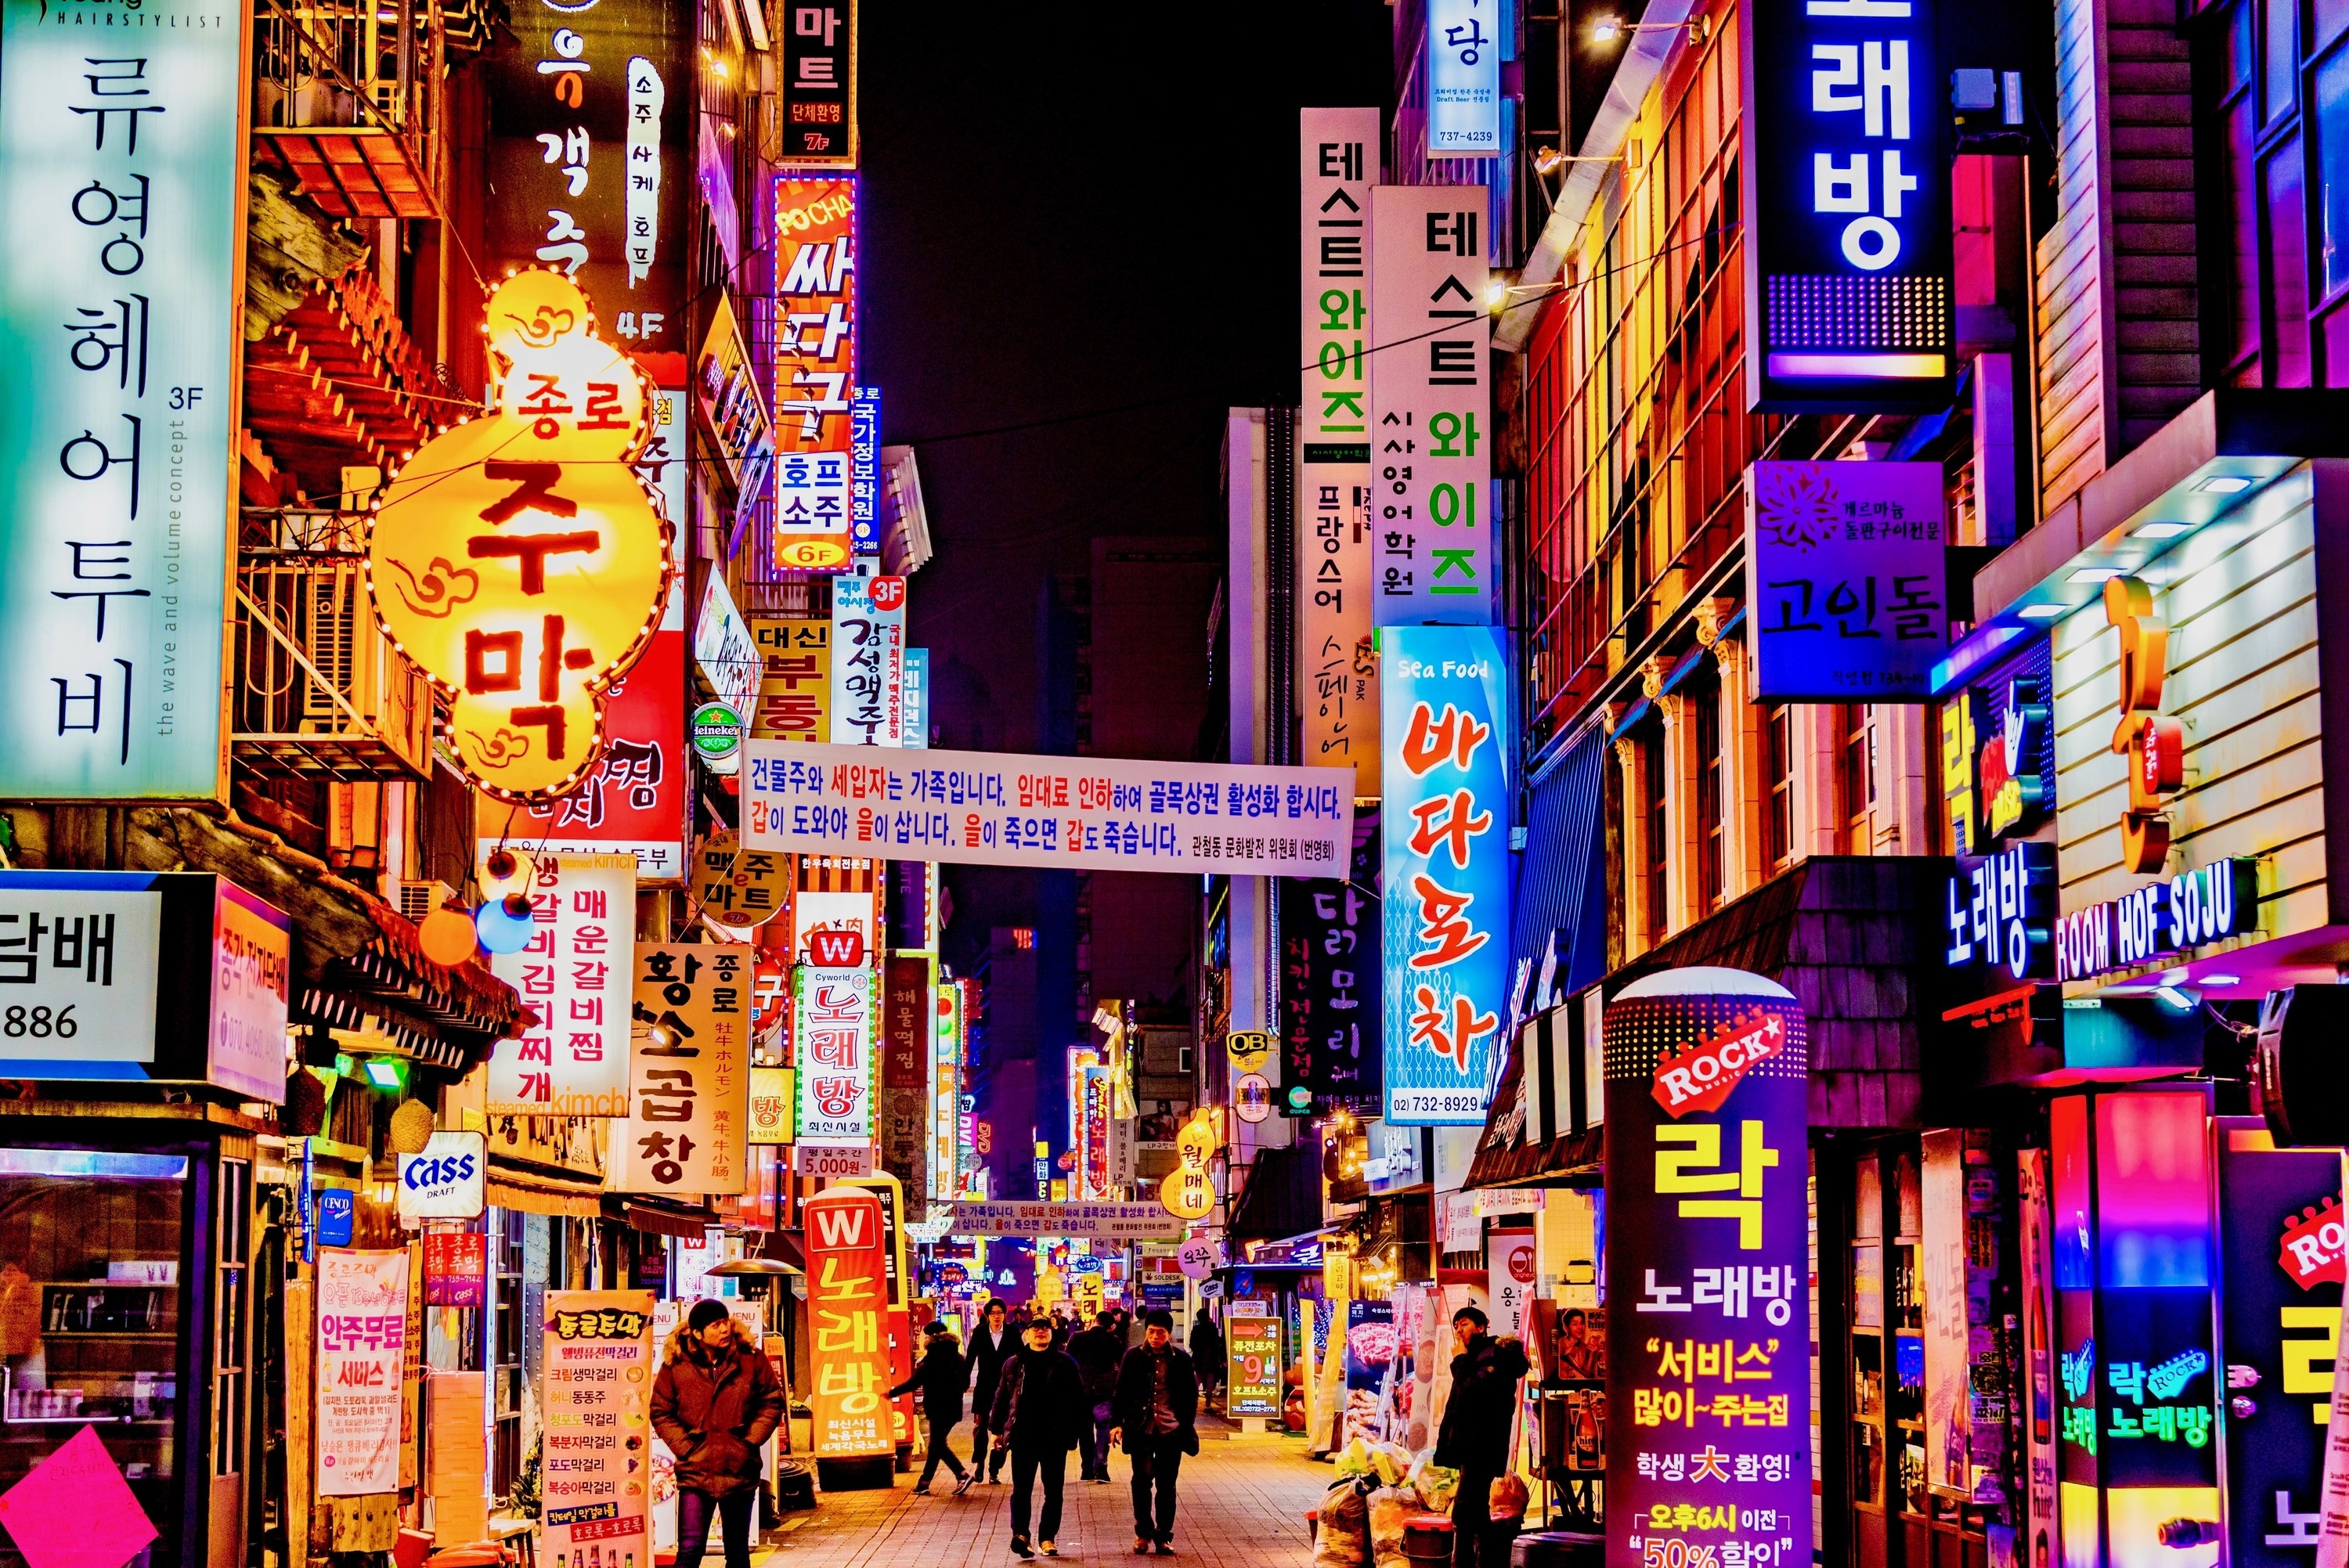 City street in South Korea